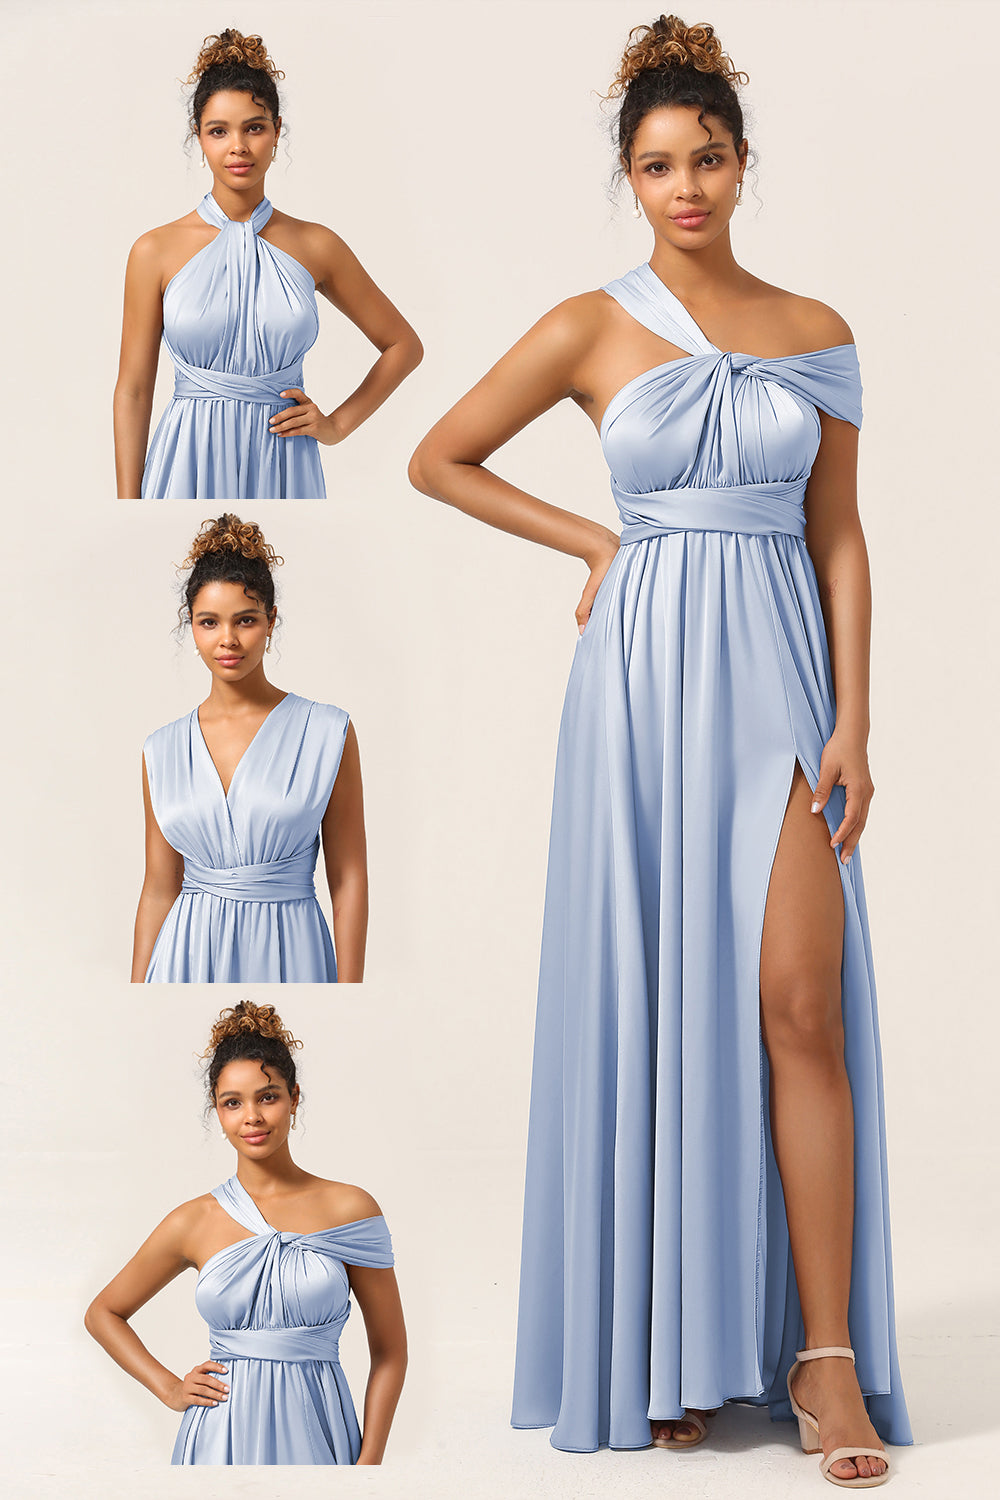 Dusty Blue A-Line Convertible Floor Length Satin Bridesmaid Dress